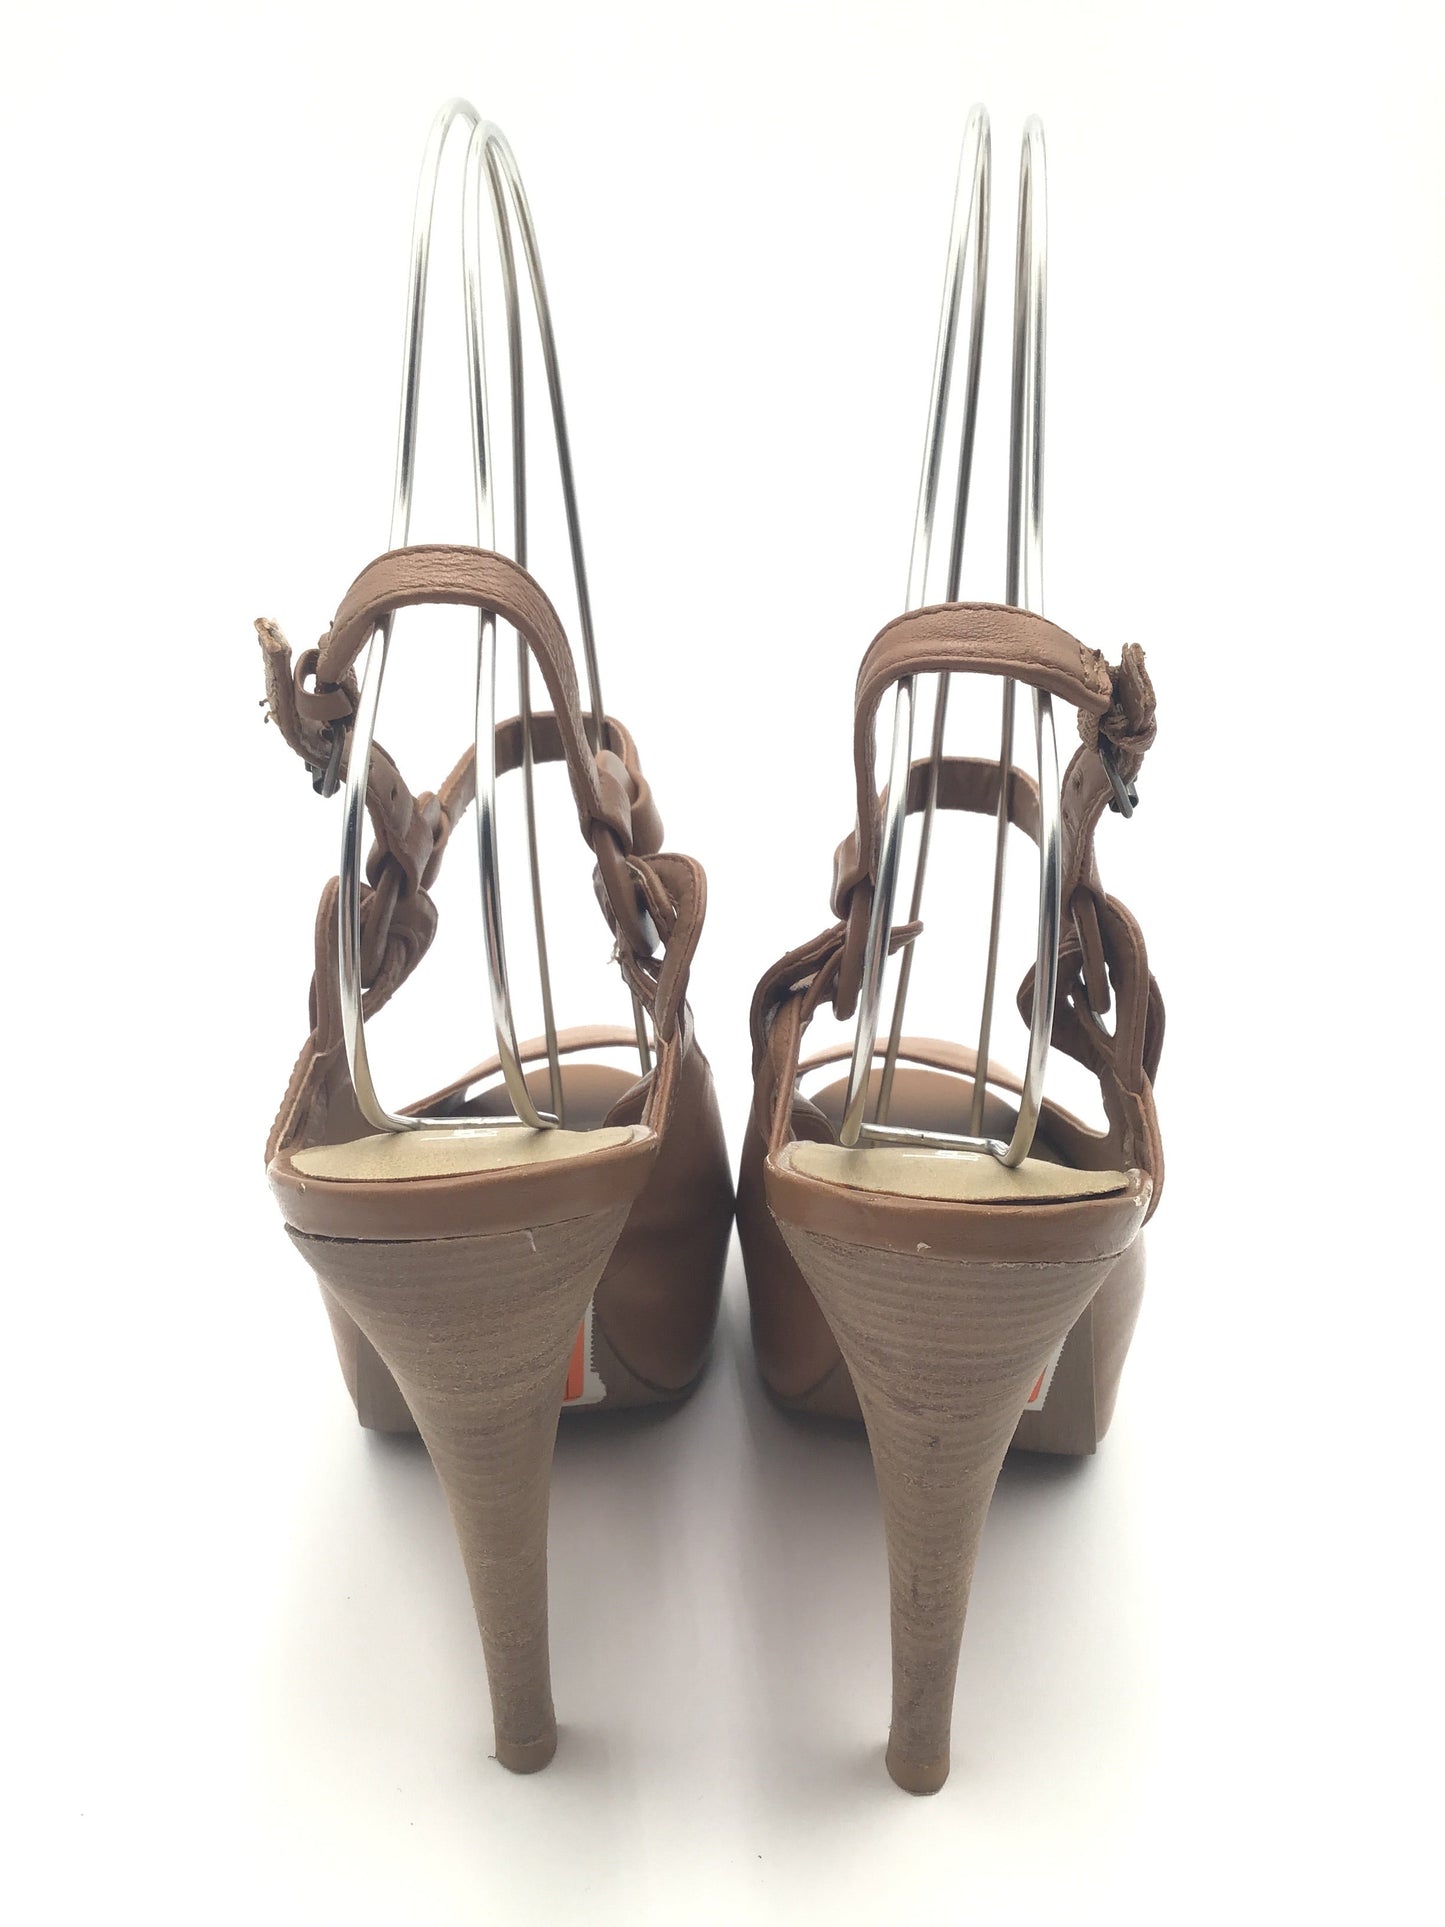 Tan Shoes Heels Stiletto Cmc, Size 7.5